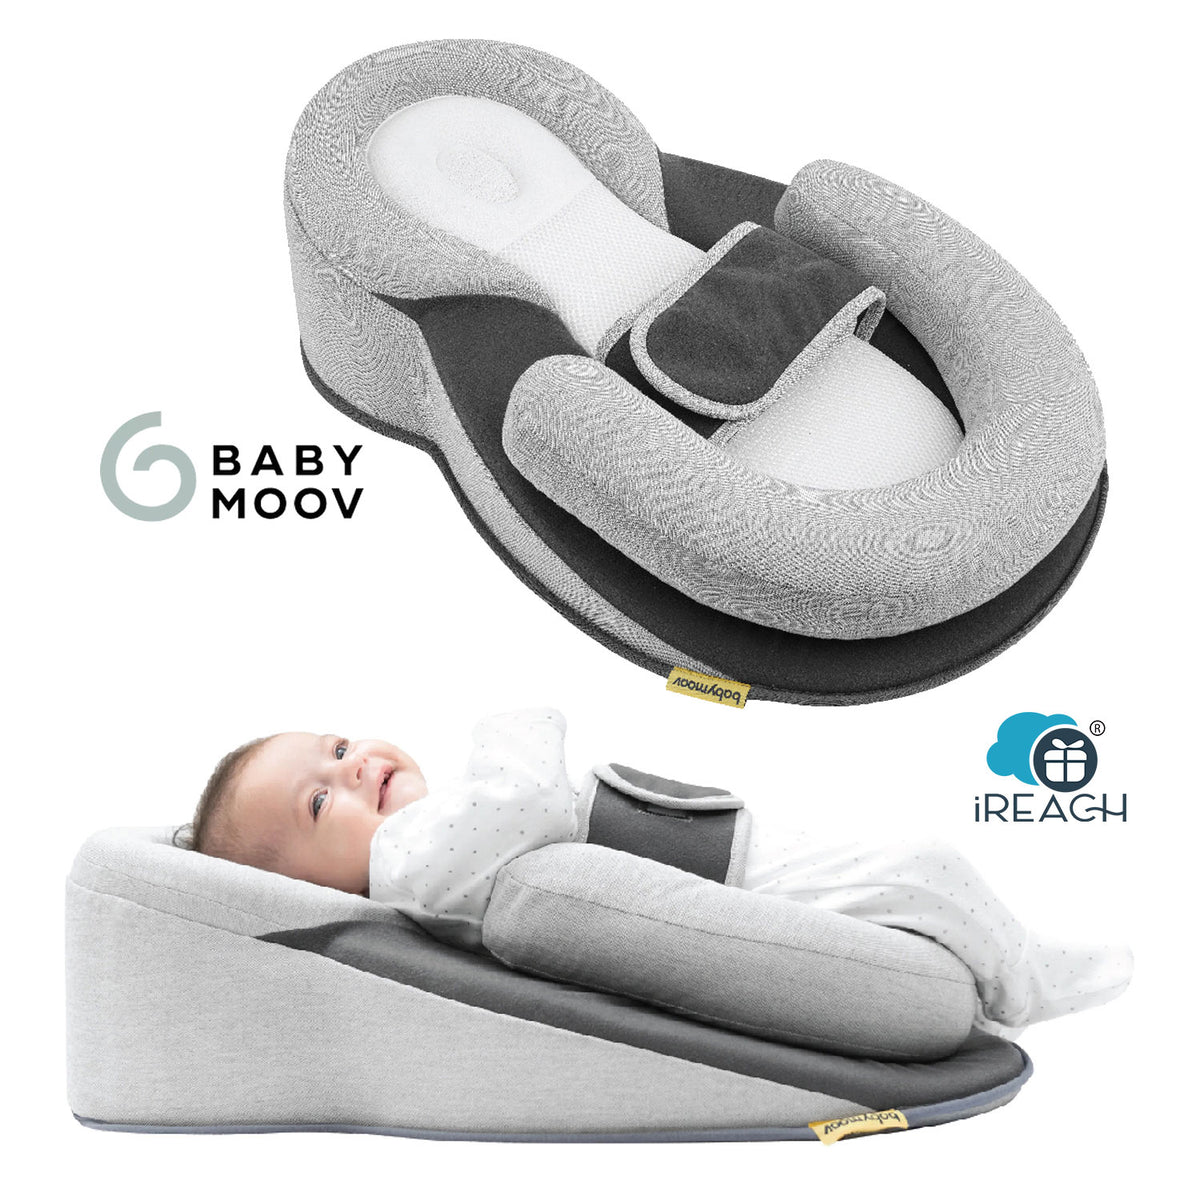 Babymoov 睡眠墊 Cosydream+ 初生寶寶睡眠定位枕幫助呼吸更順暢